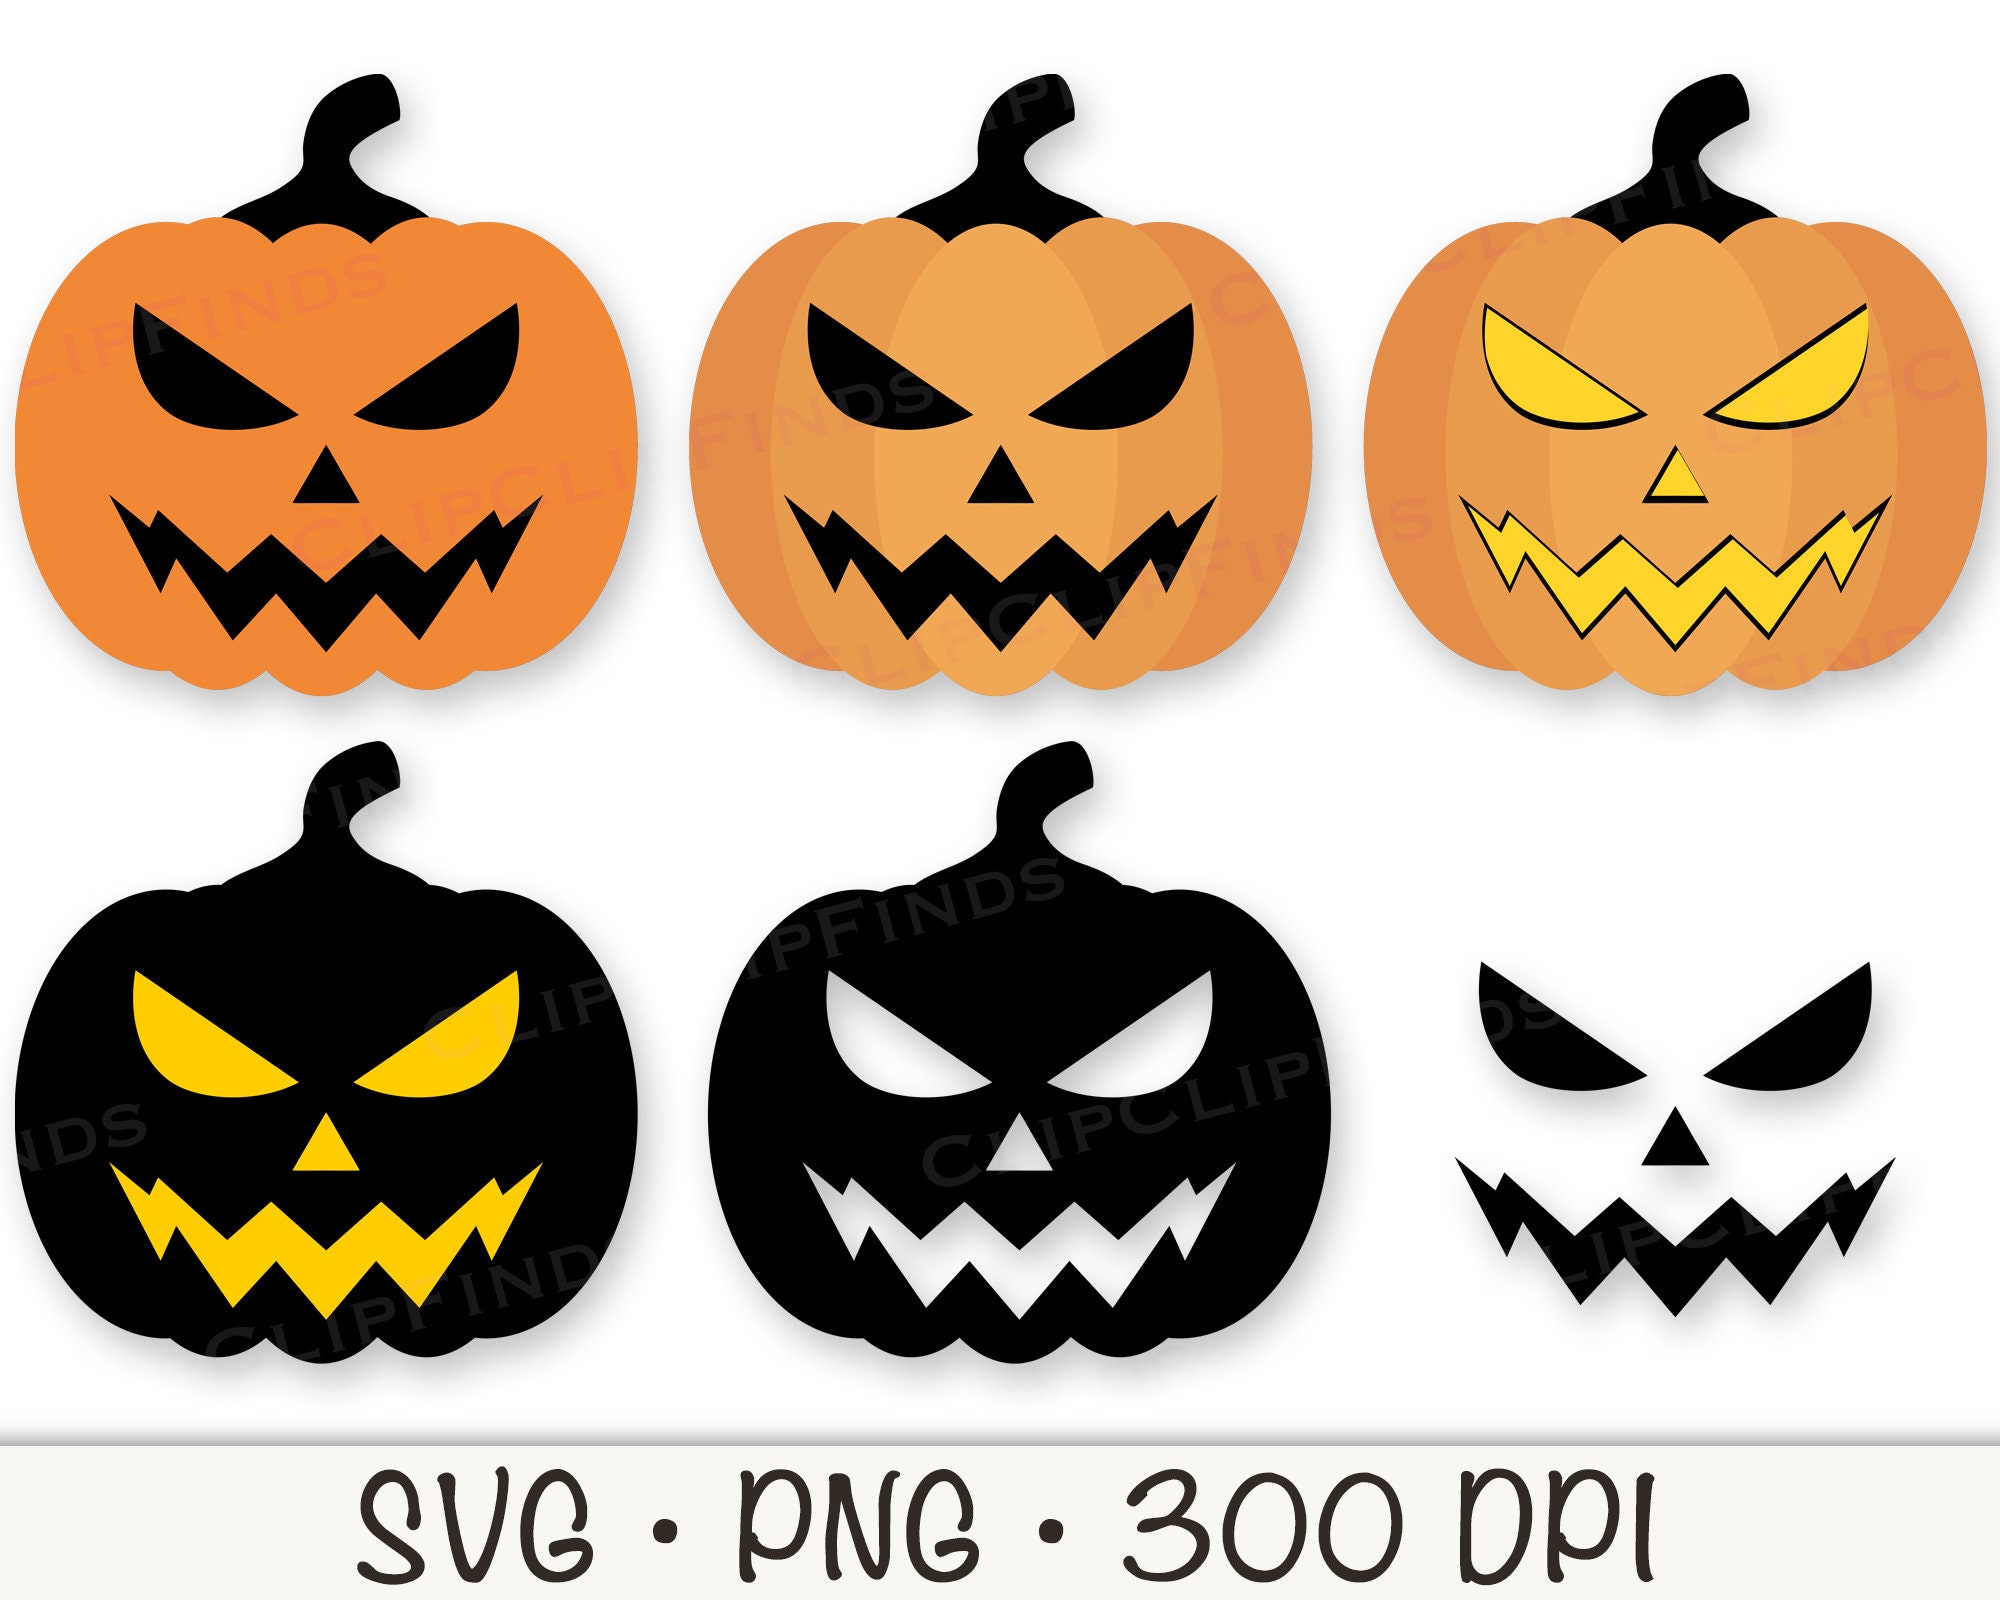 Mean Angry Scary Jack-o-lantern Halloween Pumpkin Face Bundle